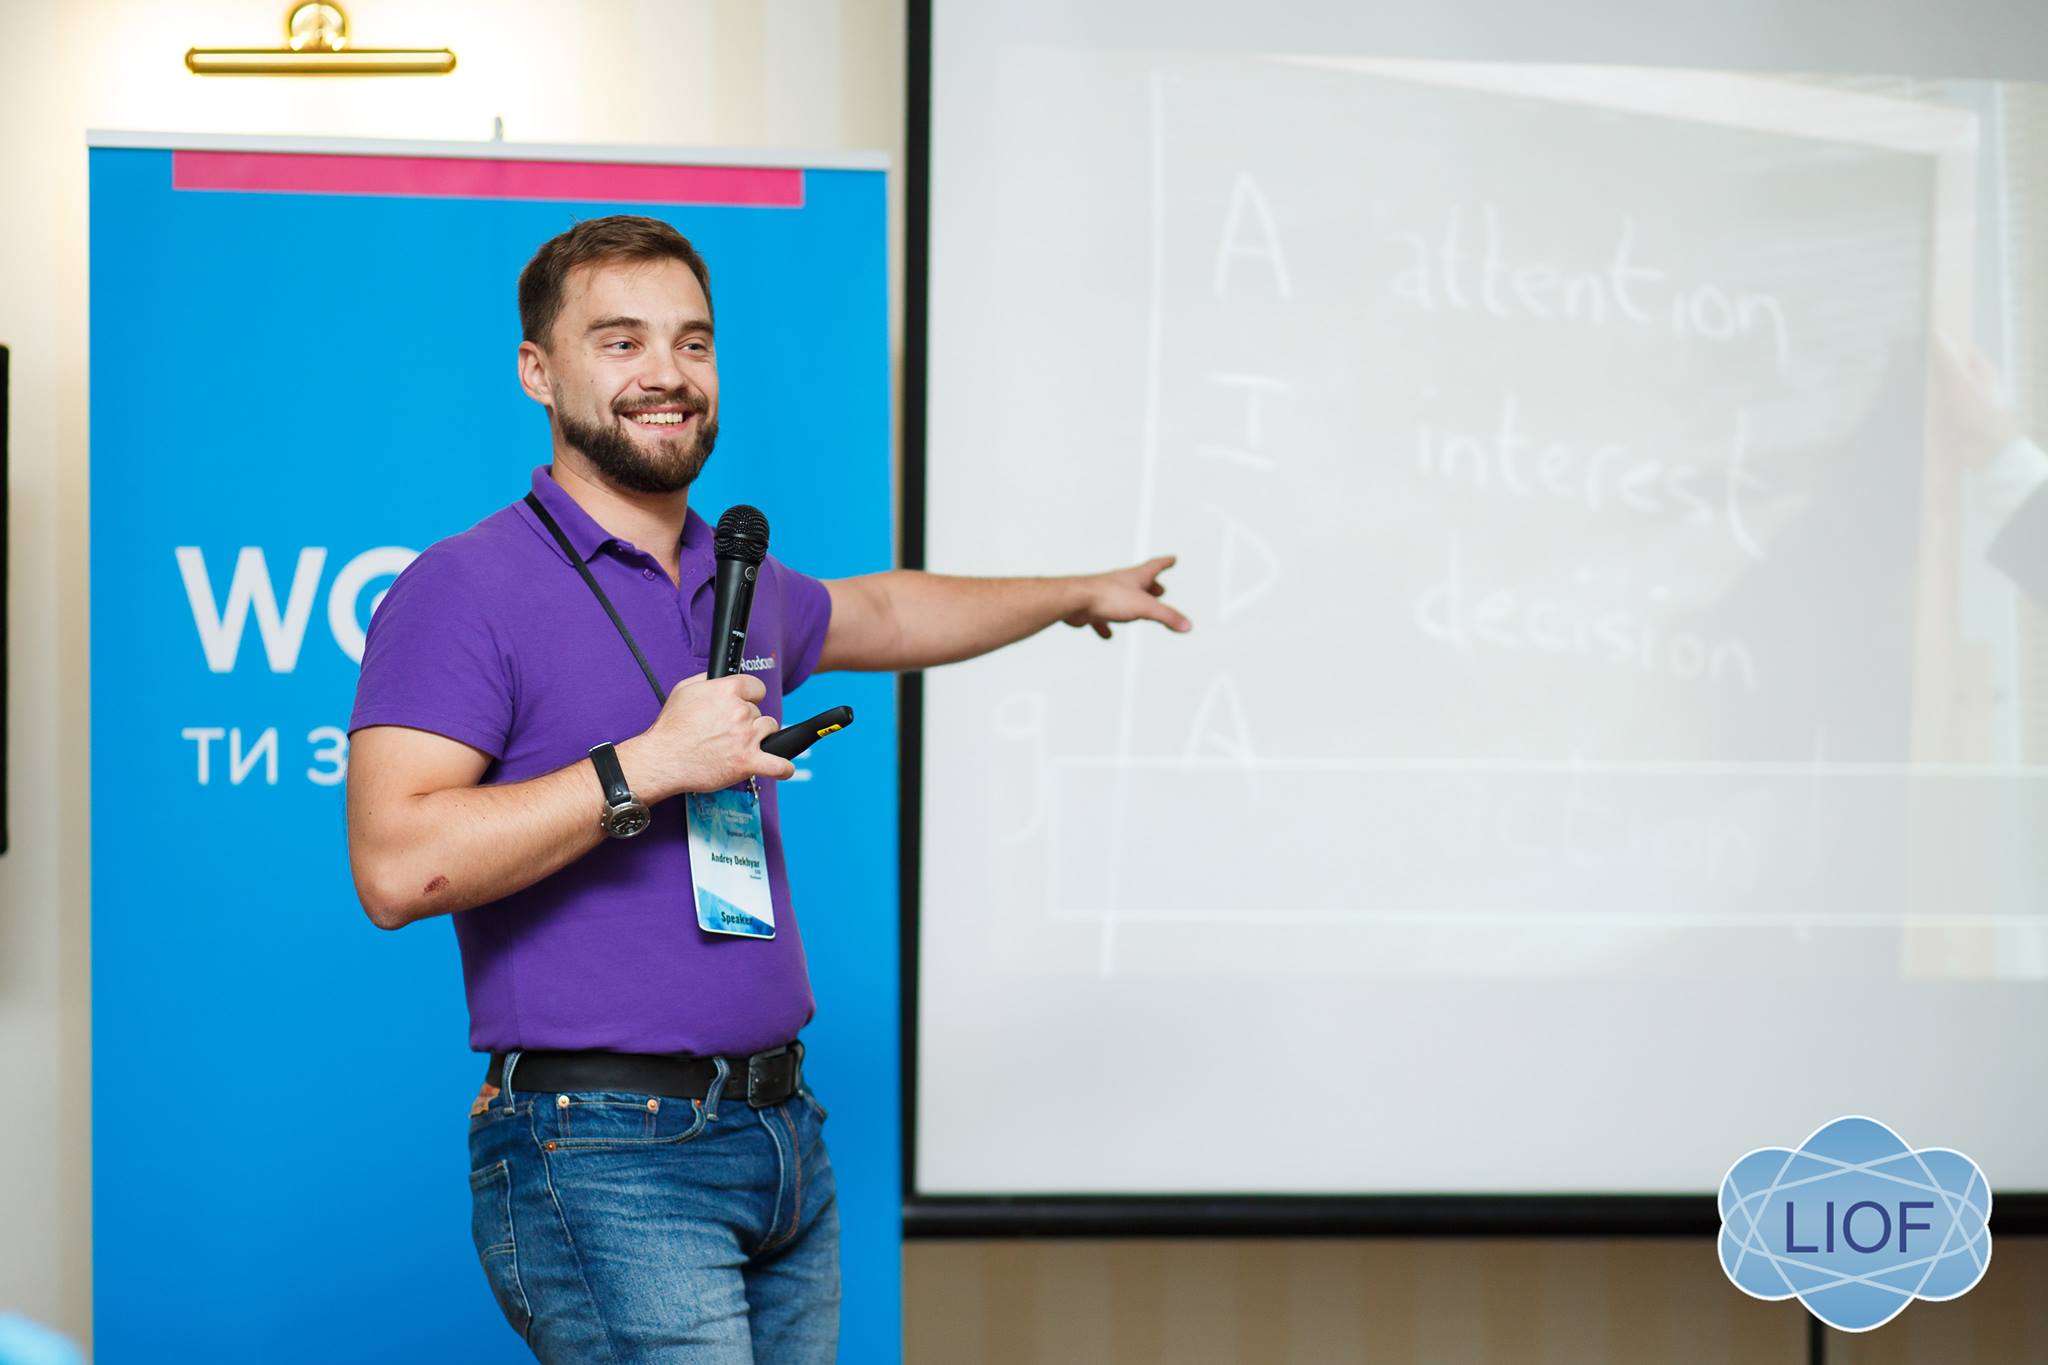 Andrey Dekhtyar, speaker at LIOF 2017